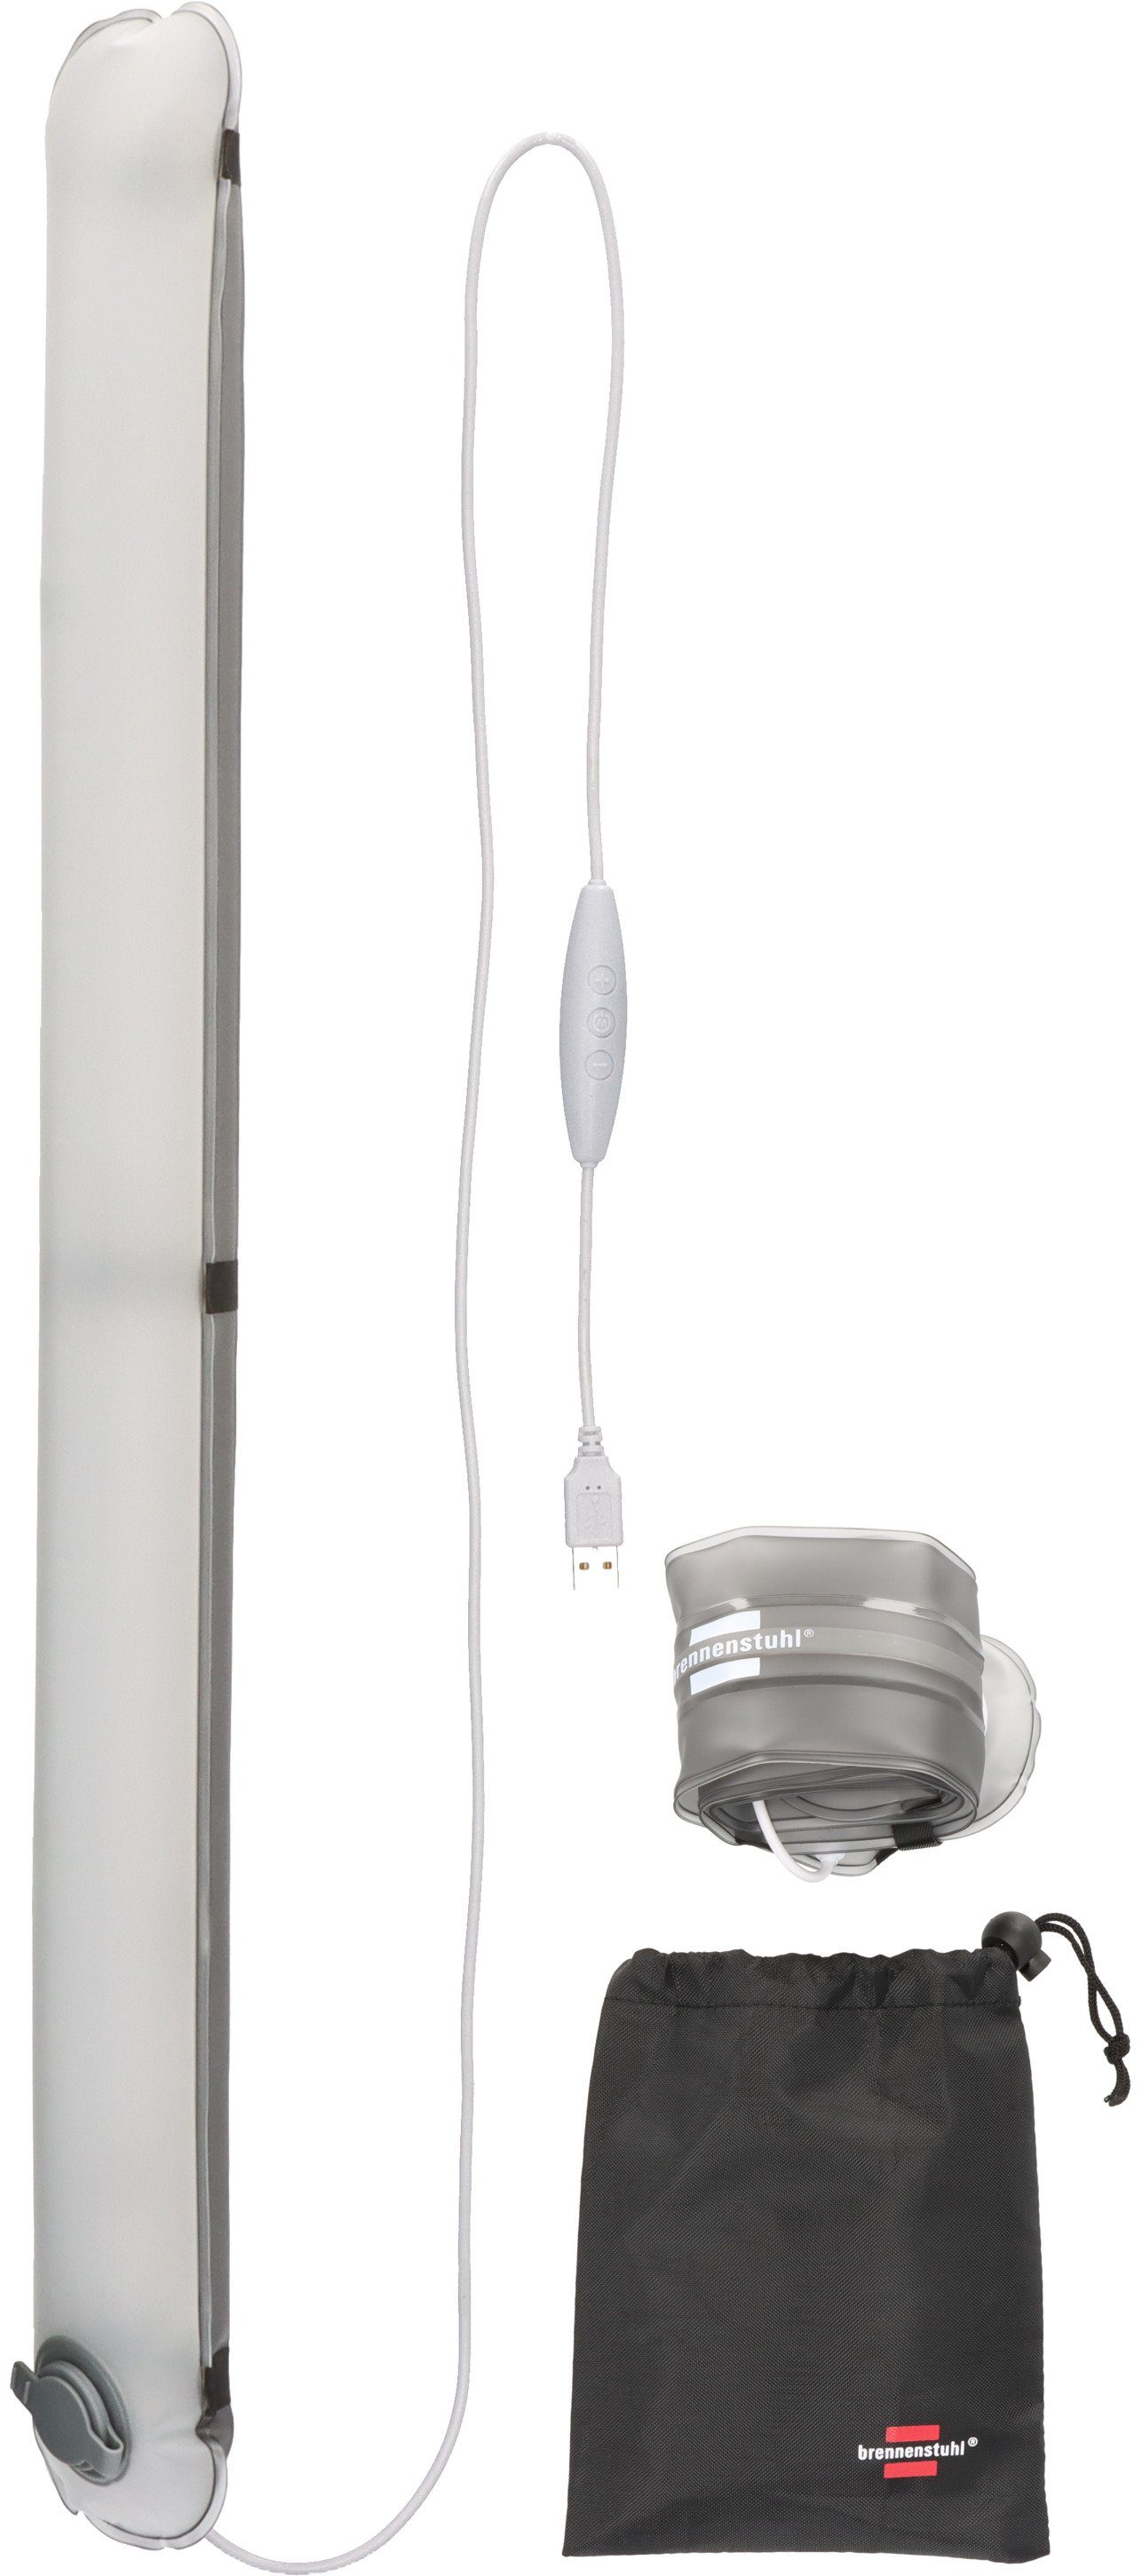 fest Air LED Kabel faltbare stufenlos aufblasbar, OLI Brennenstuhl LED Gartenleuchte dimmbar, mit integriert, Röhre USB 1, 1m LED